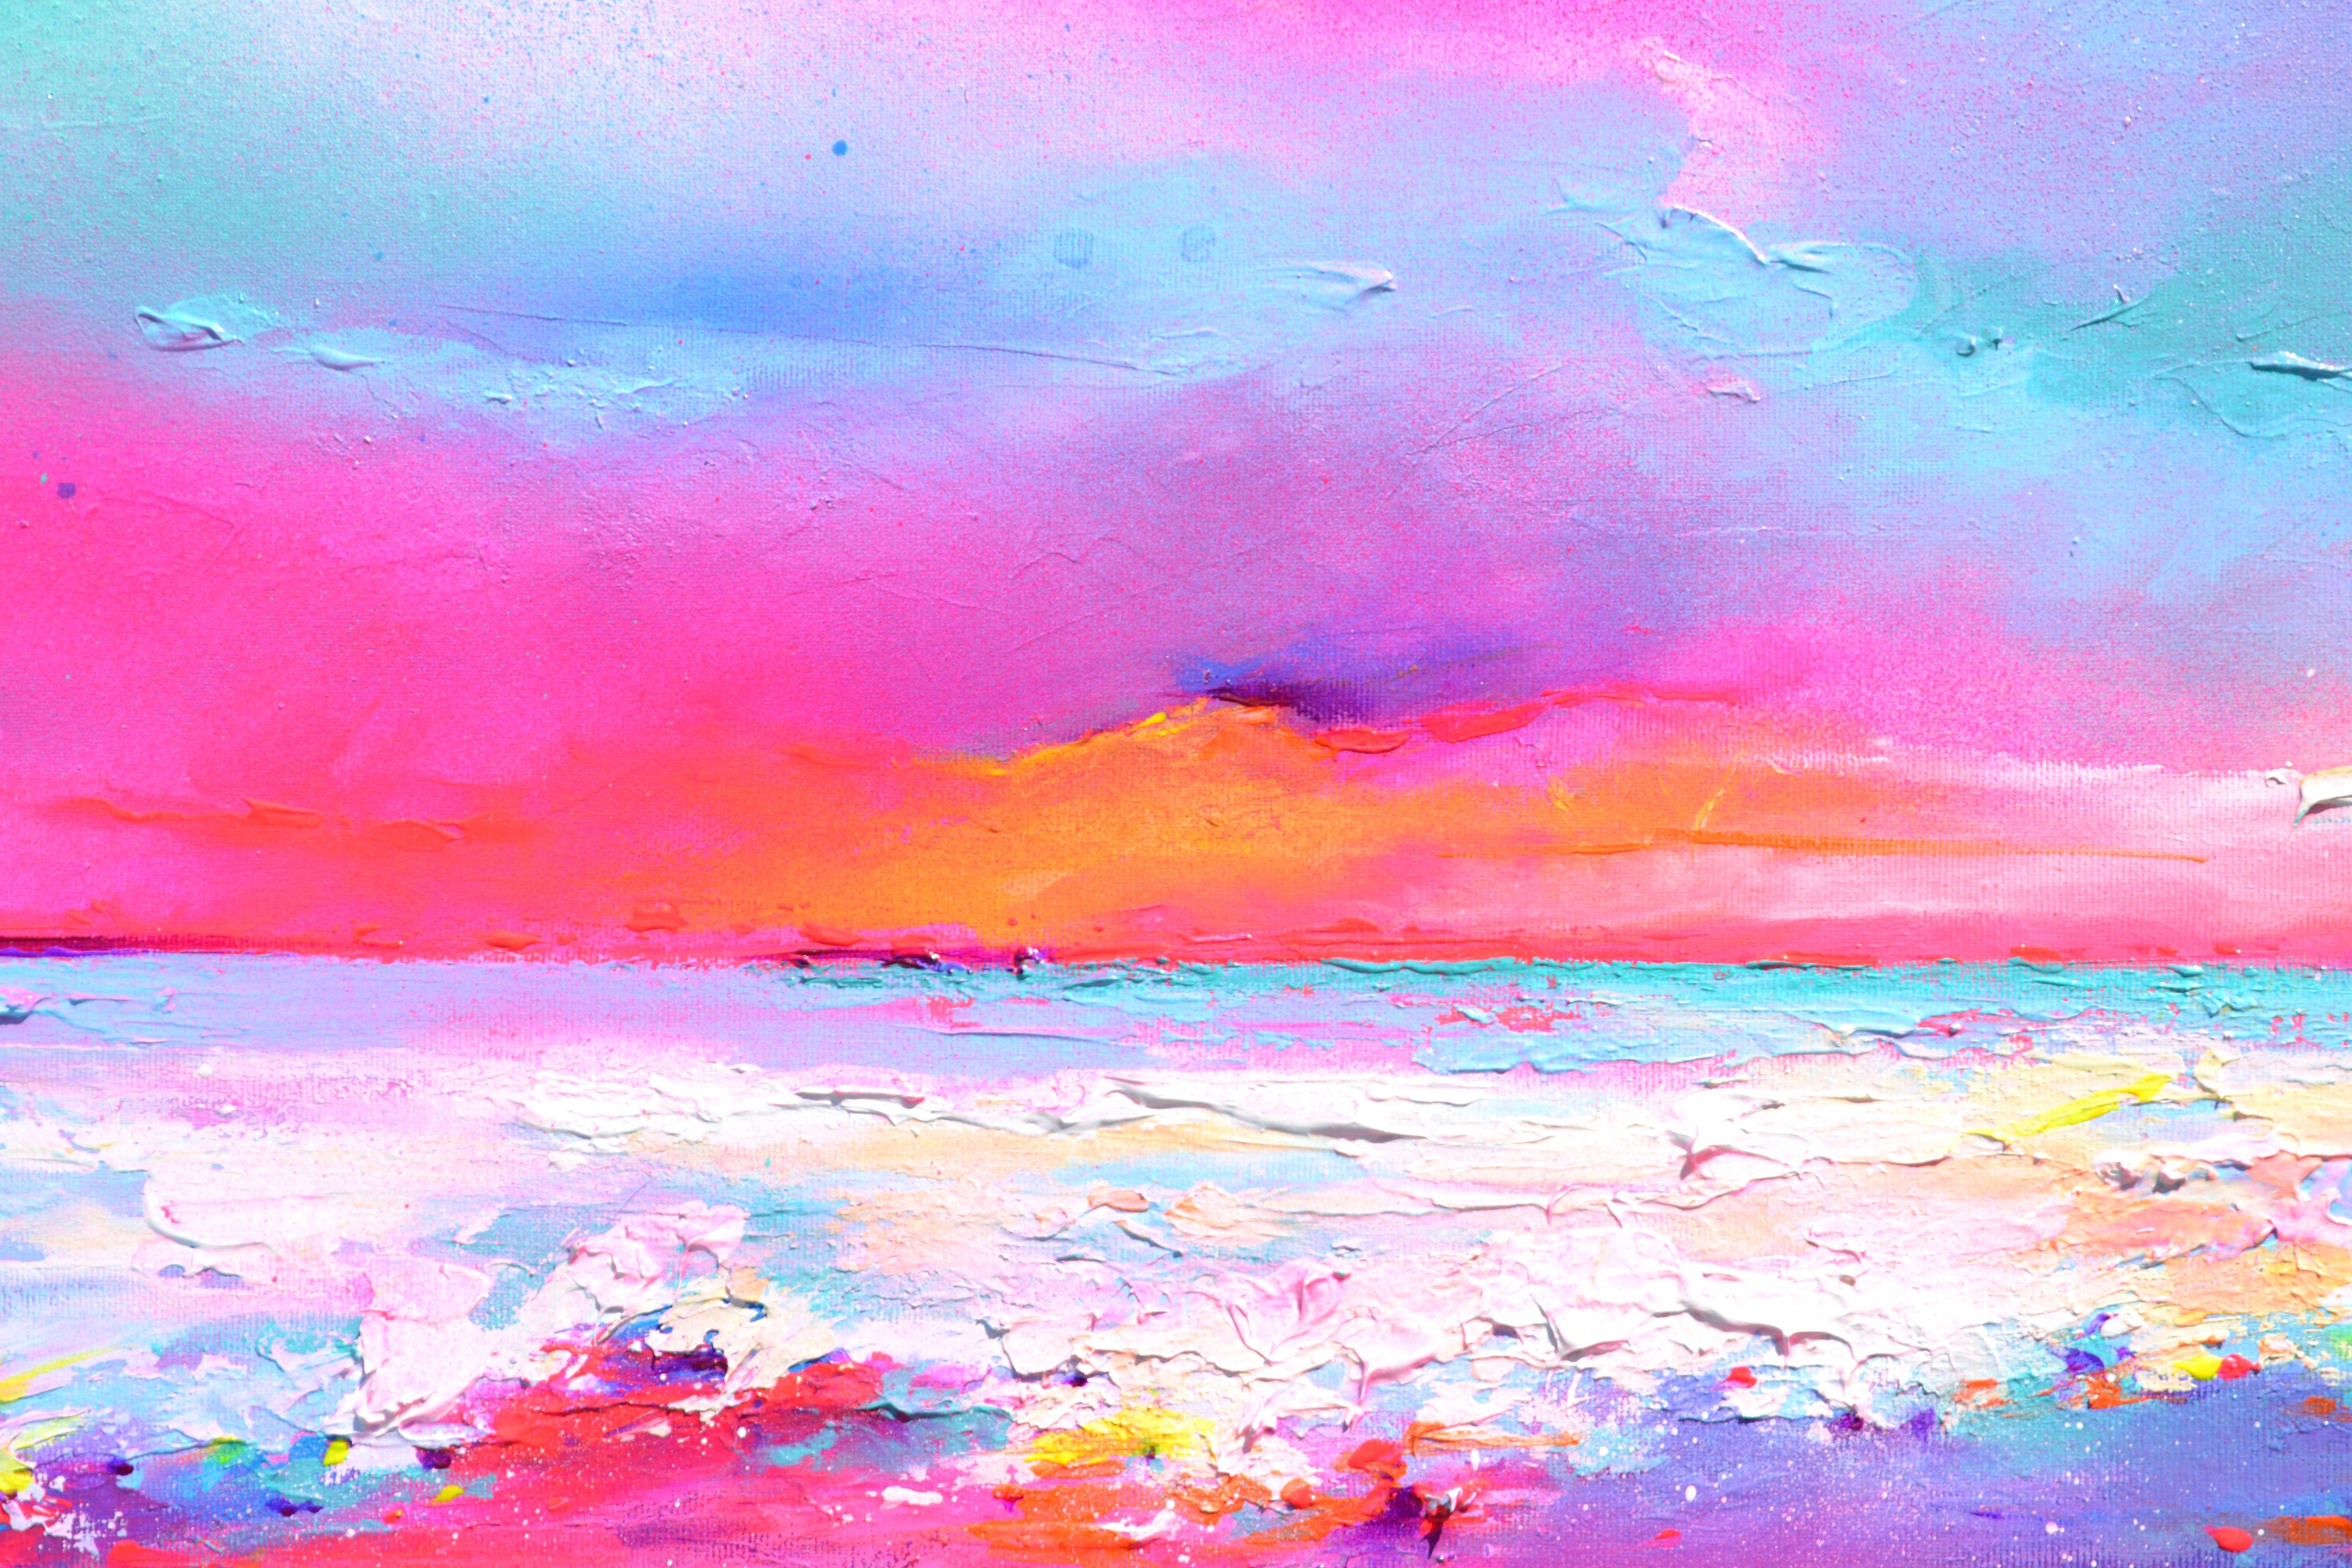 New Horizon 150 - Large Colorful Seascape Painting, Painting, Acrylic on Canvas 1